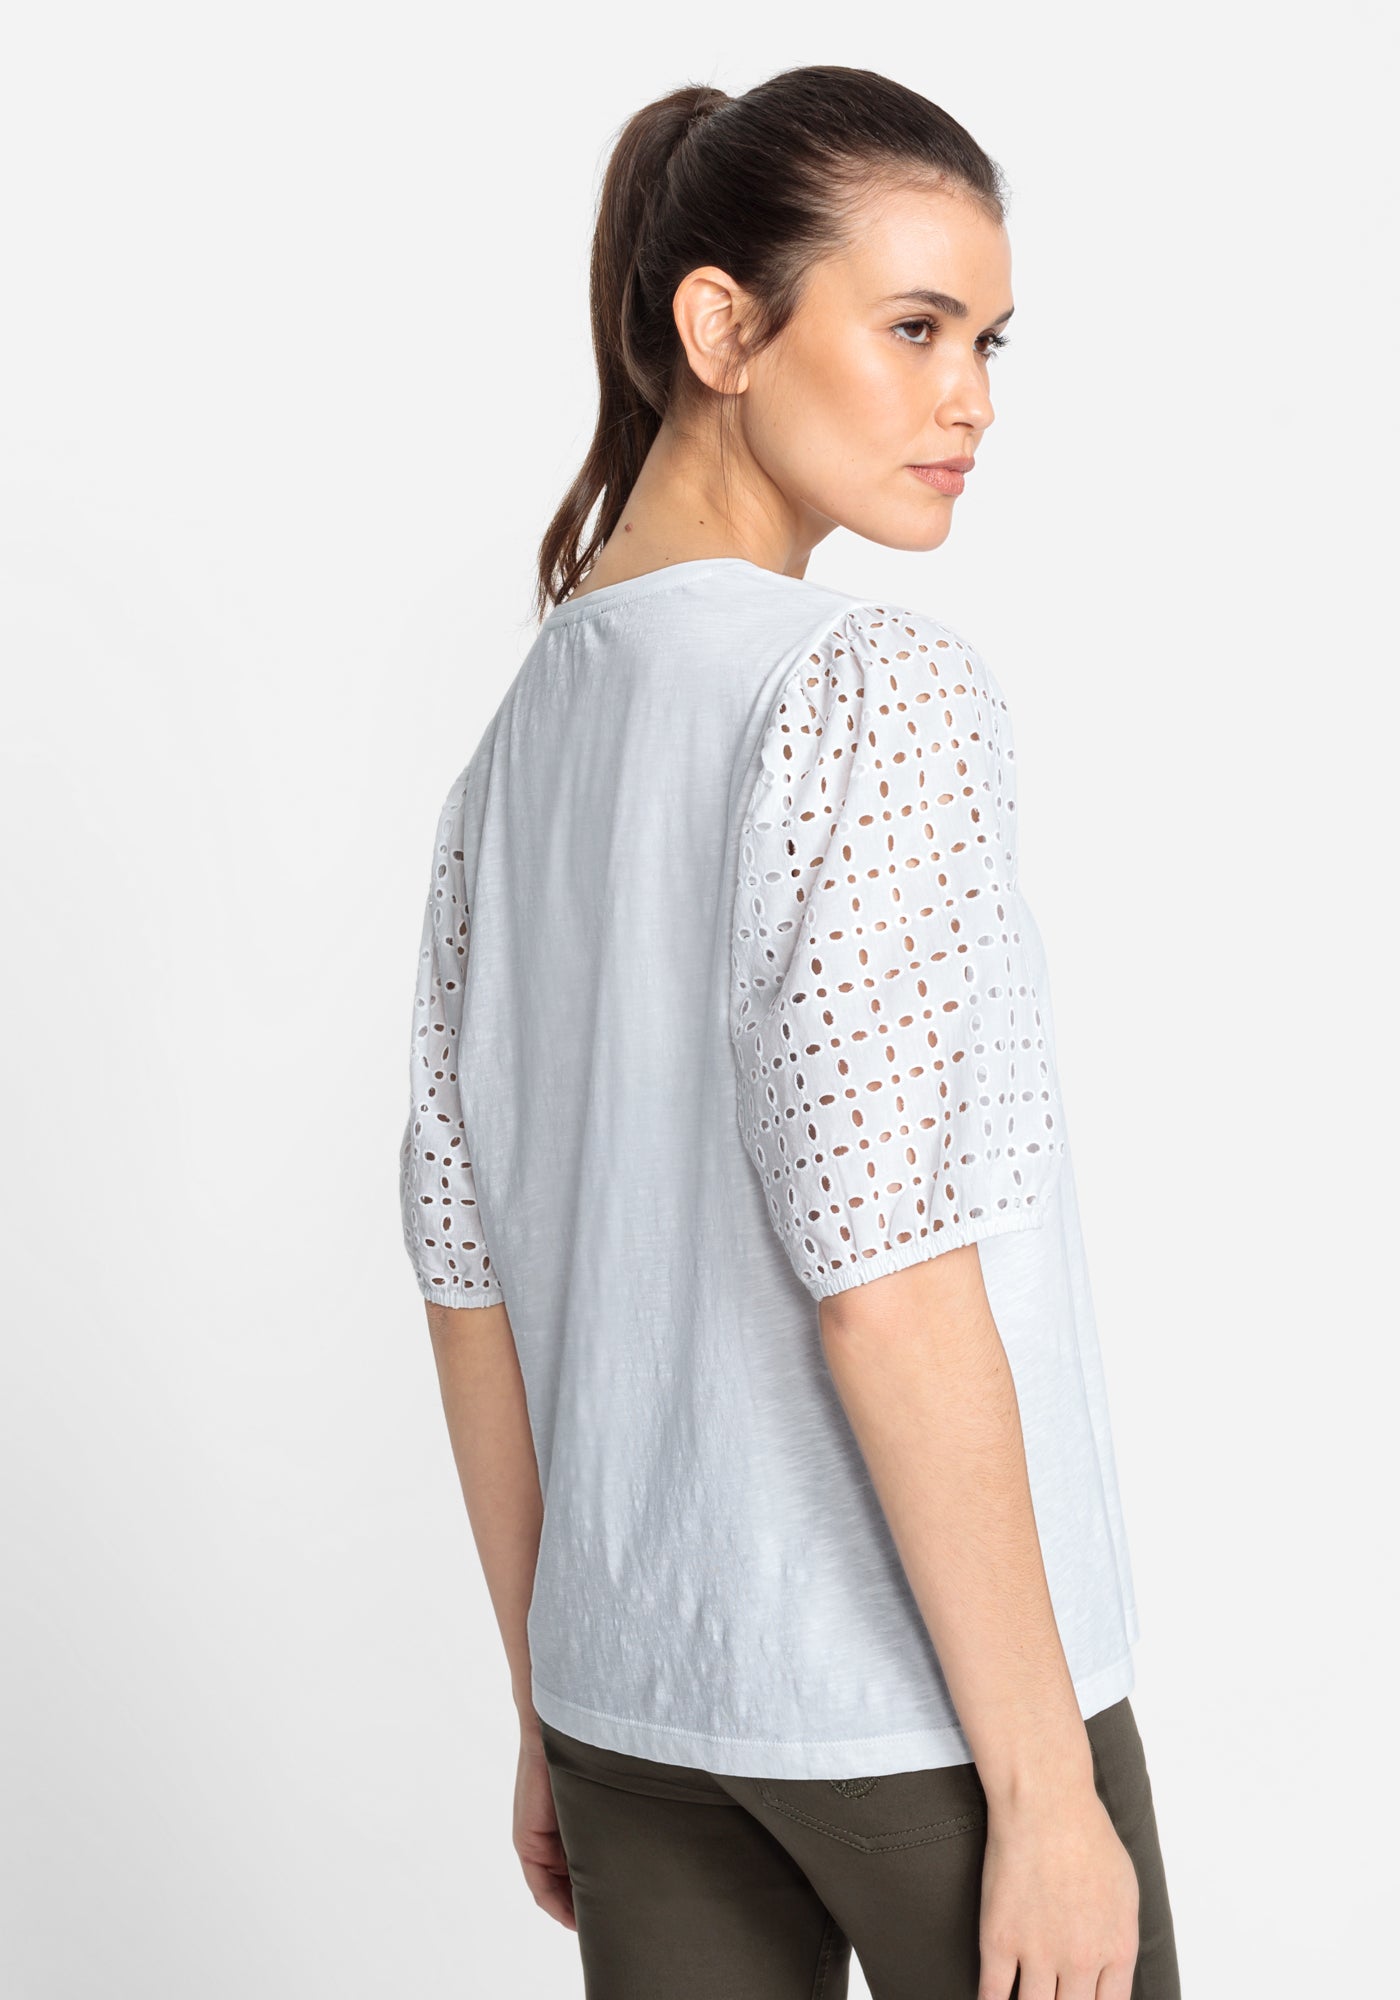 Olsen Cotton Lace Sleeve T-shirt